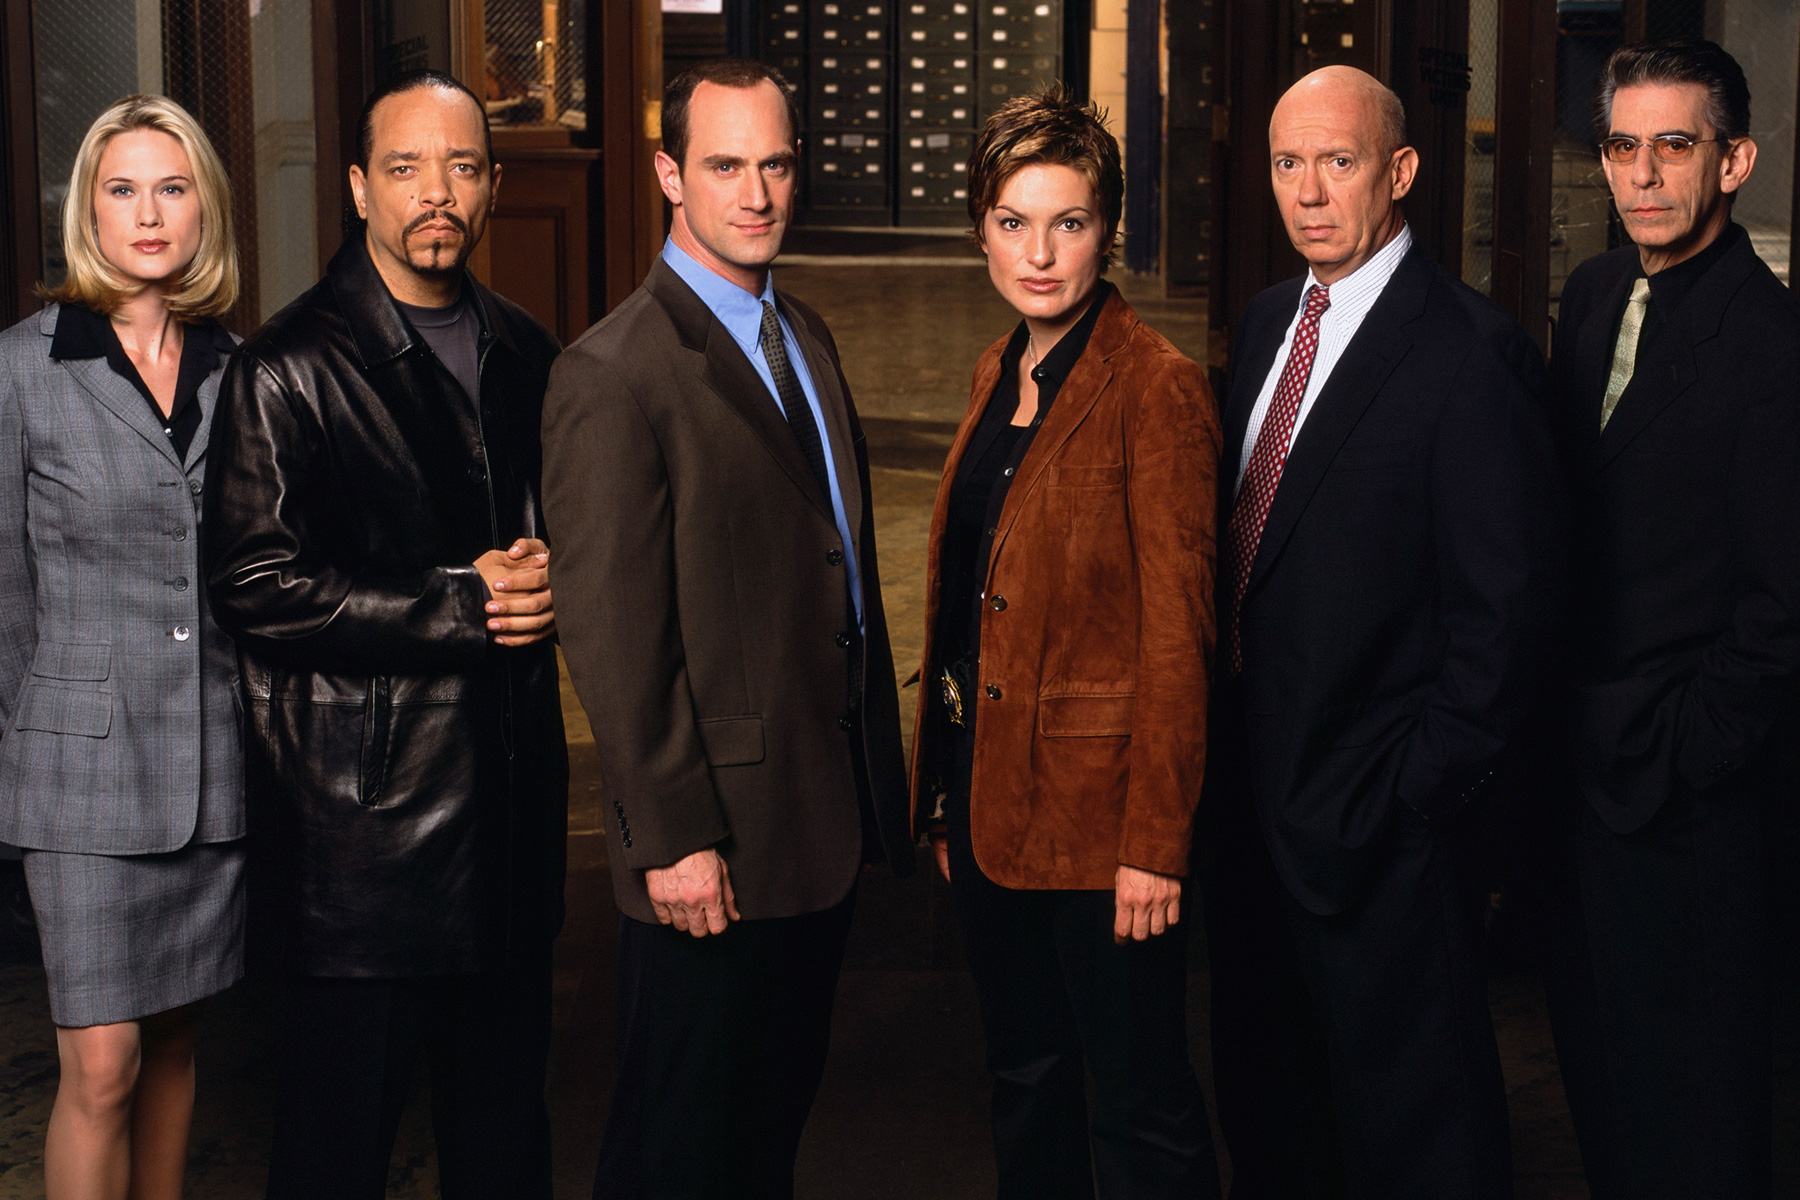 Law & Order SVU cast Photo via. 